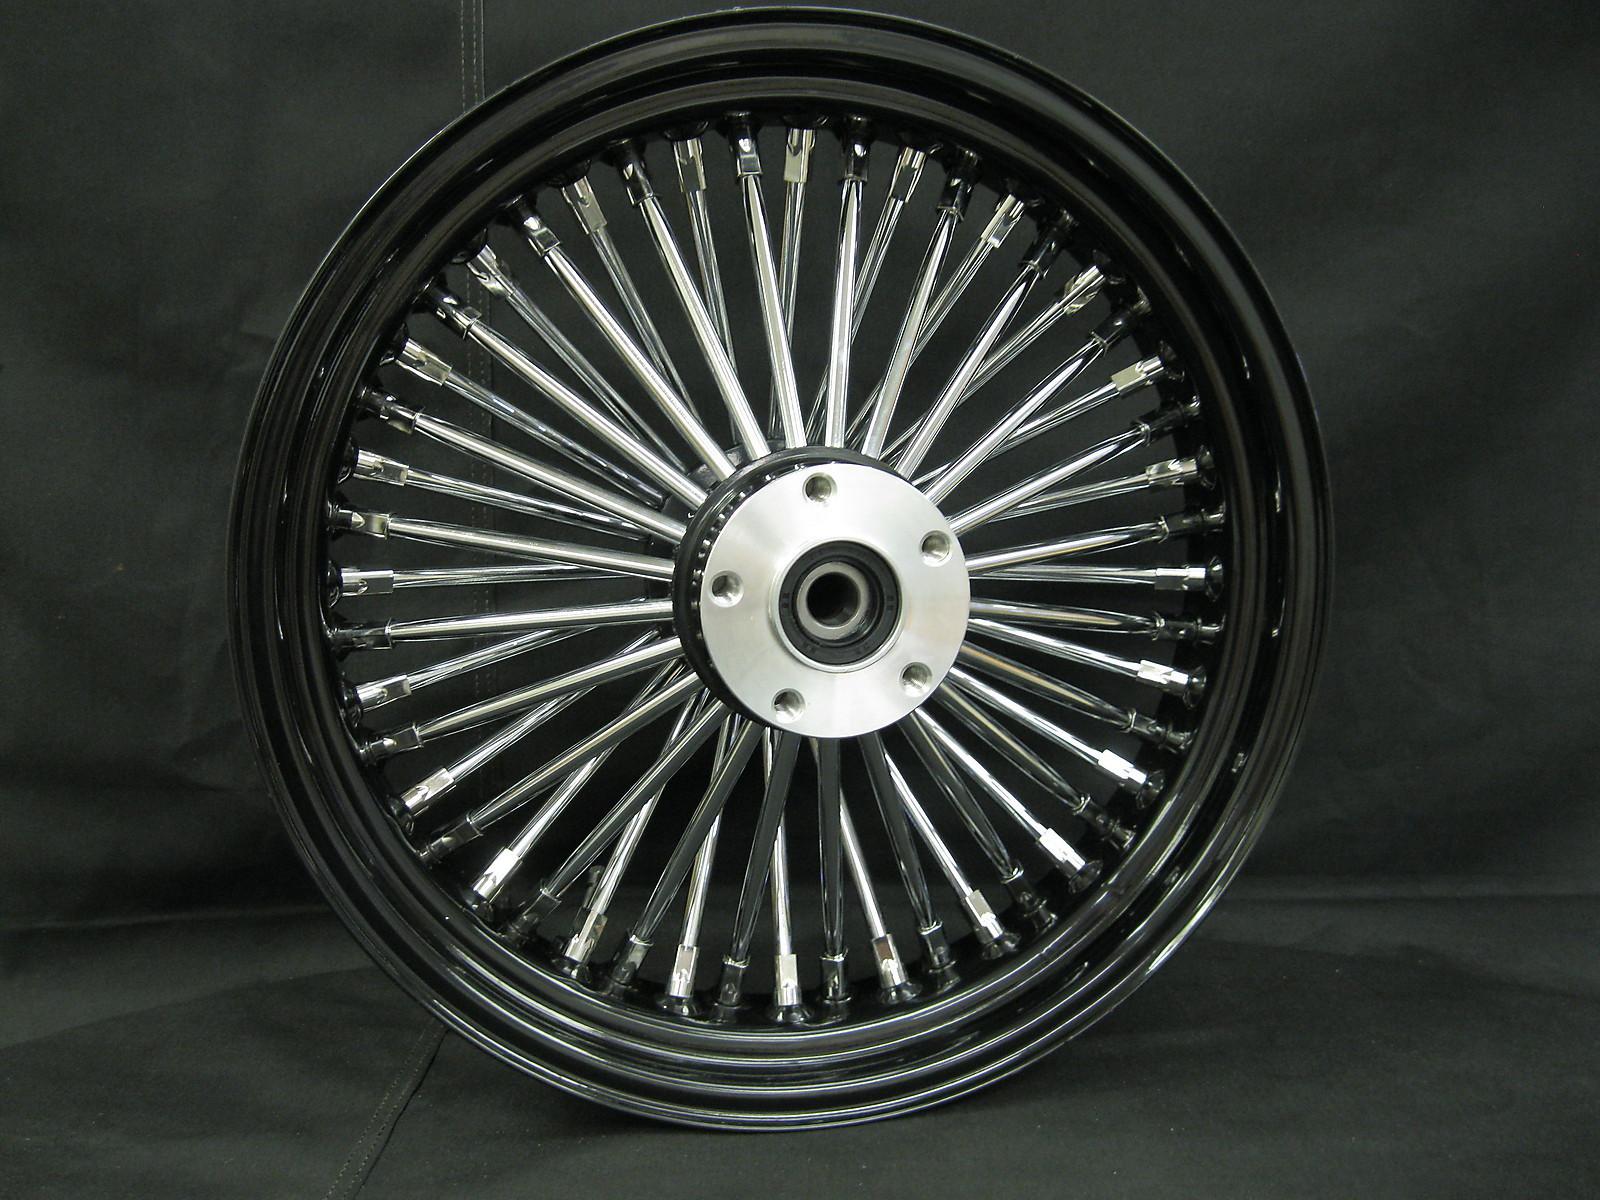 Black & chrome ultima 48 fat king spoke front 16x3.5" wheel for 86-99 for harley